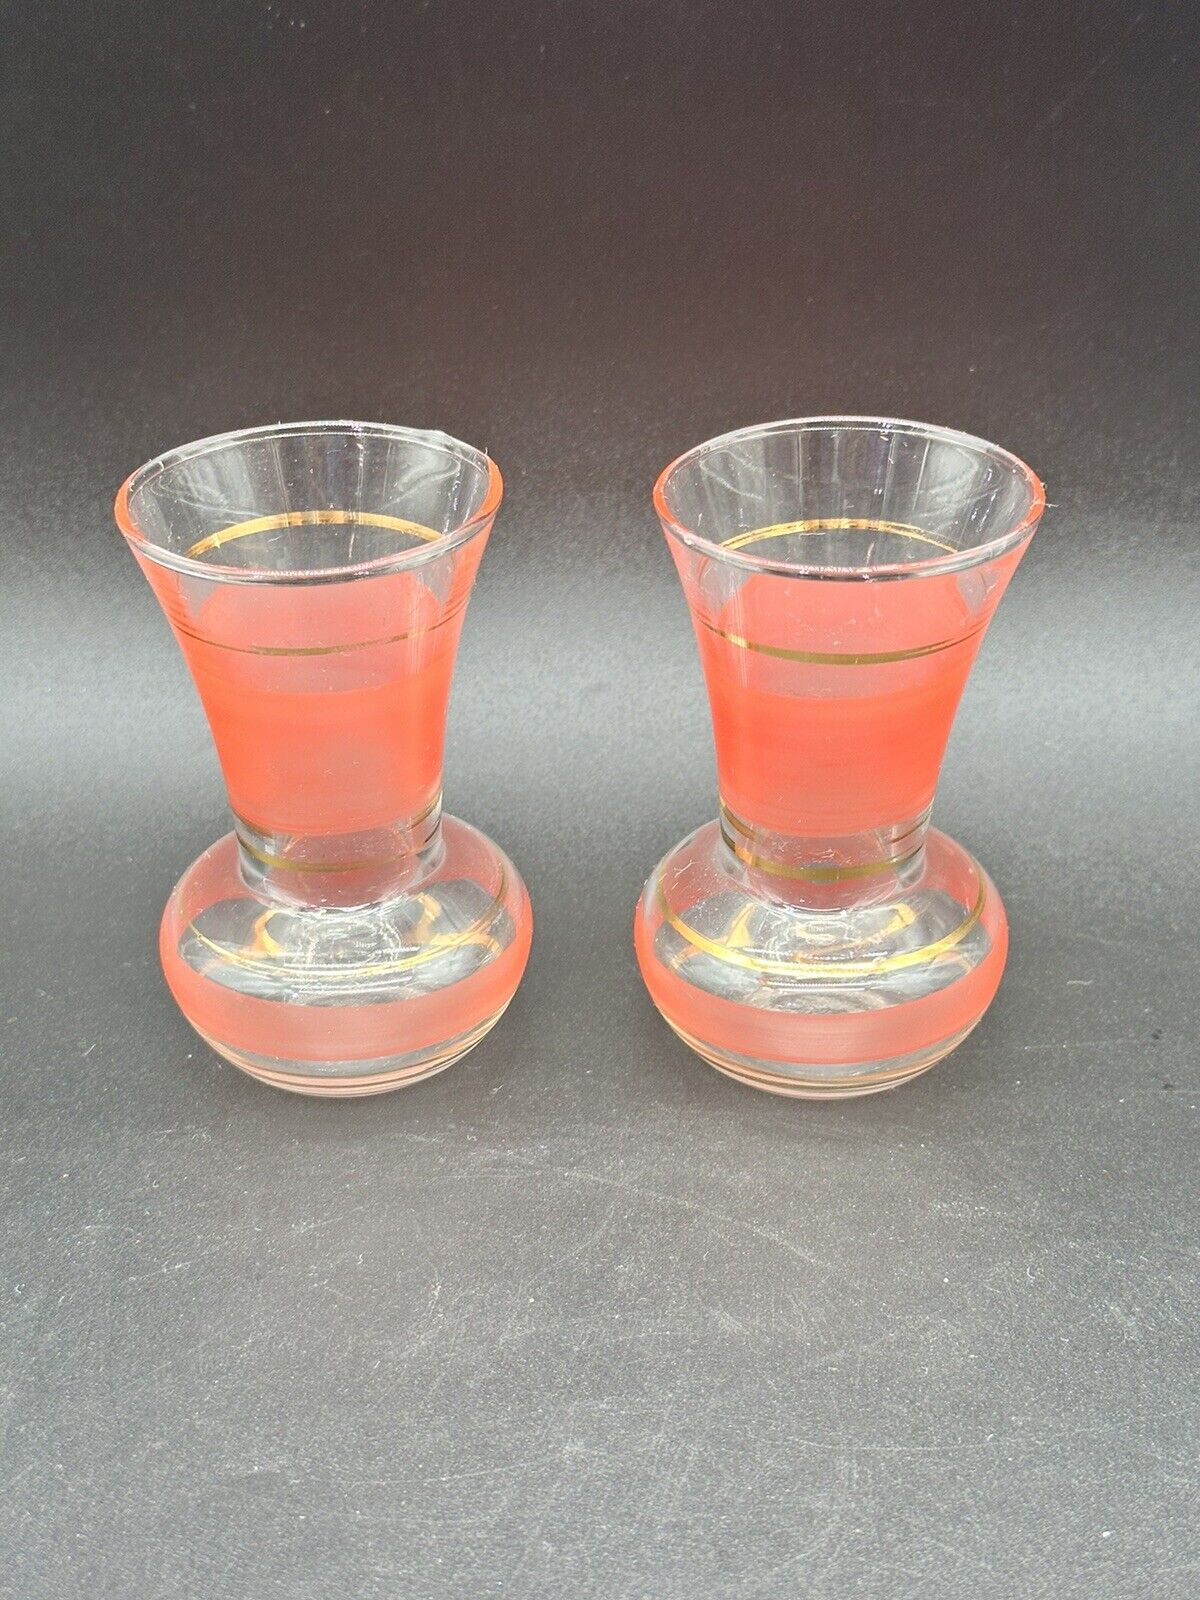 2 Vintage 1950s Bartlett Collins Glass Bud Vase Coral Pink Frosted Gold Rim 4in